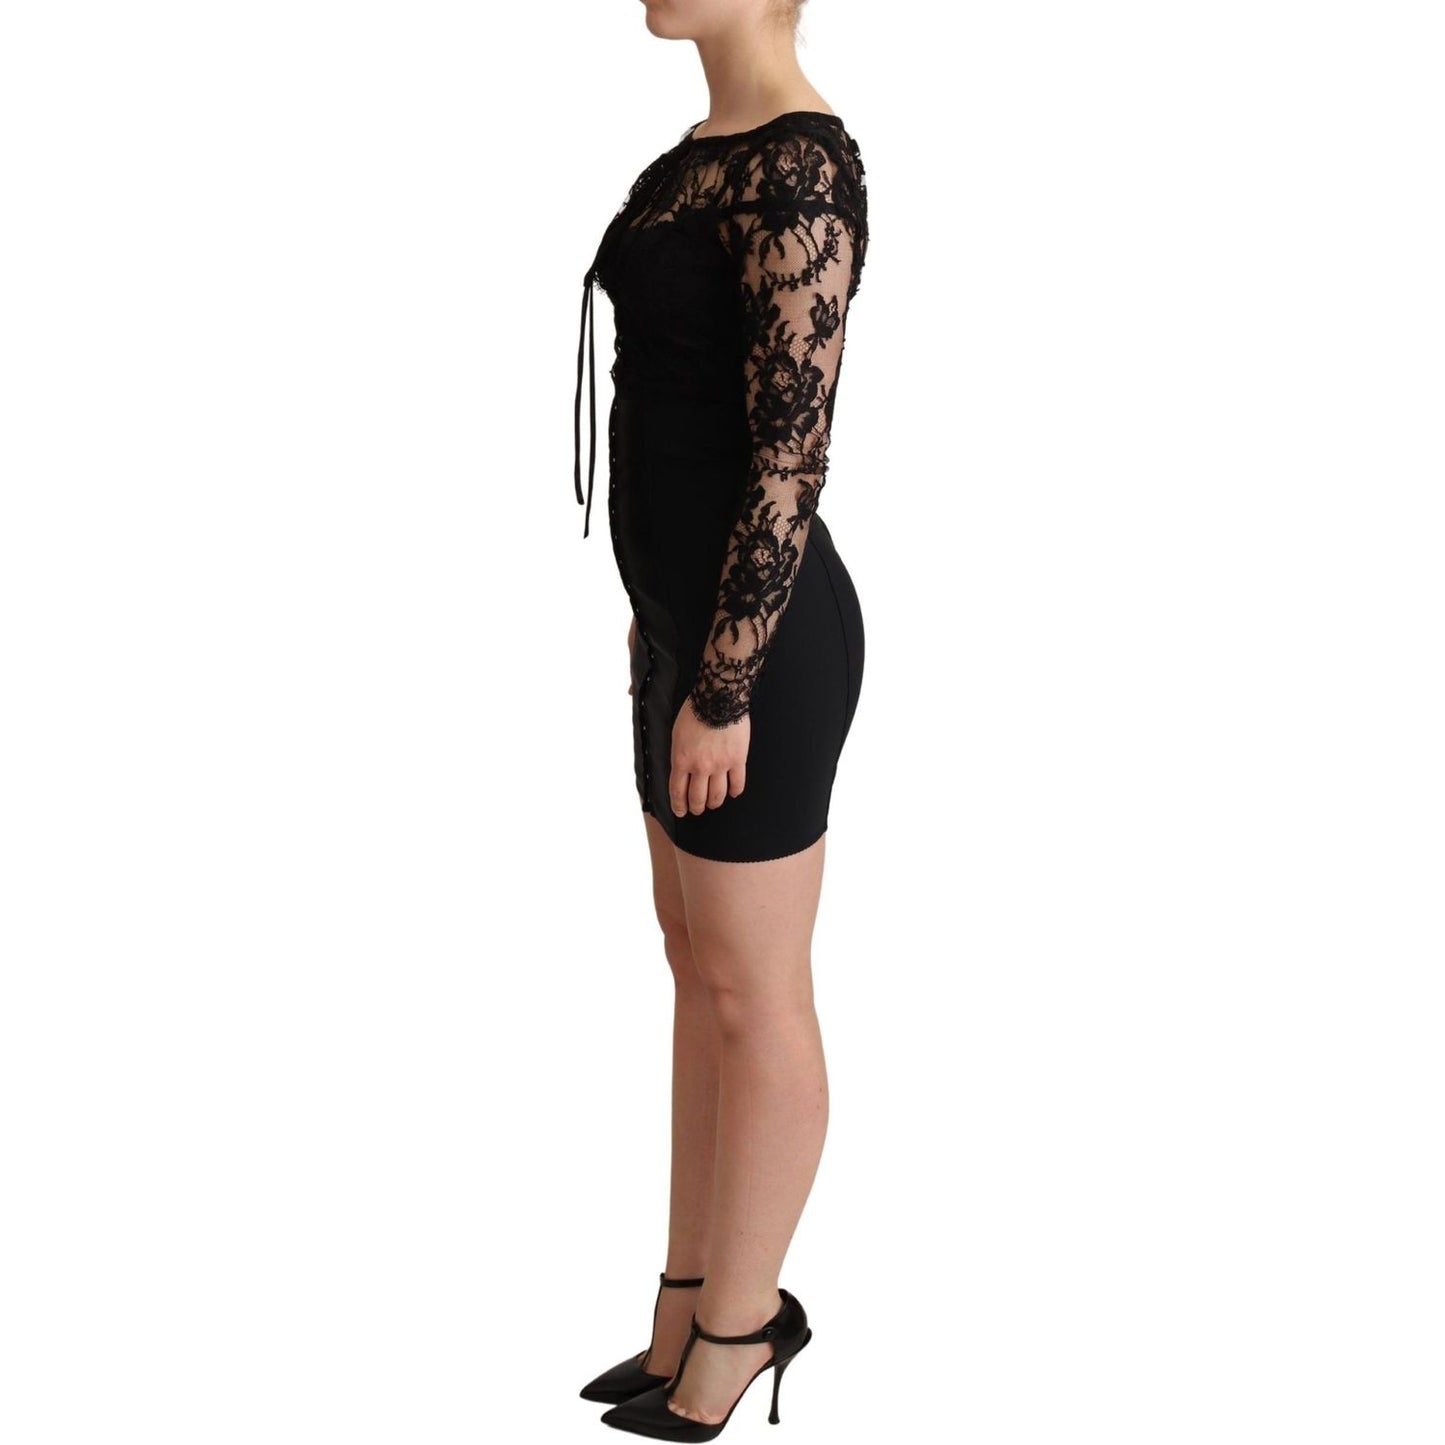 Dolce & Gabbana Elegant Black Lace Mini-Dress Delight WOMAN DRESSES black-fitted-lace-top-bodycon-mini-dress